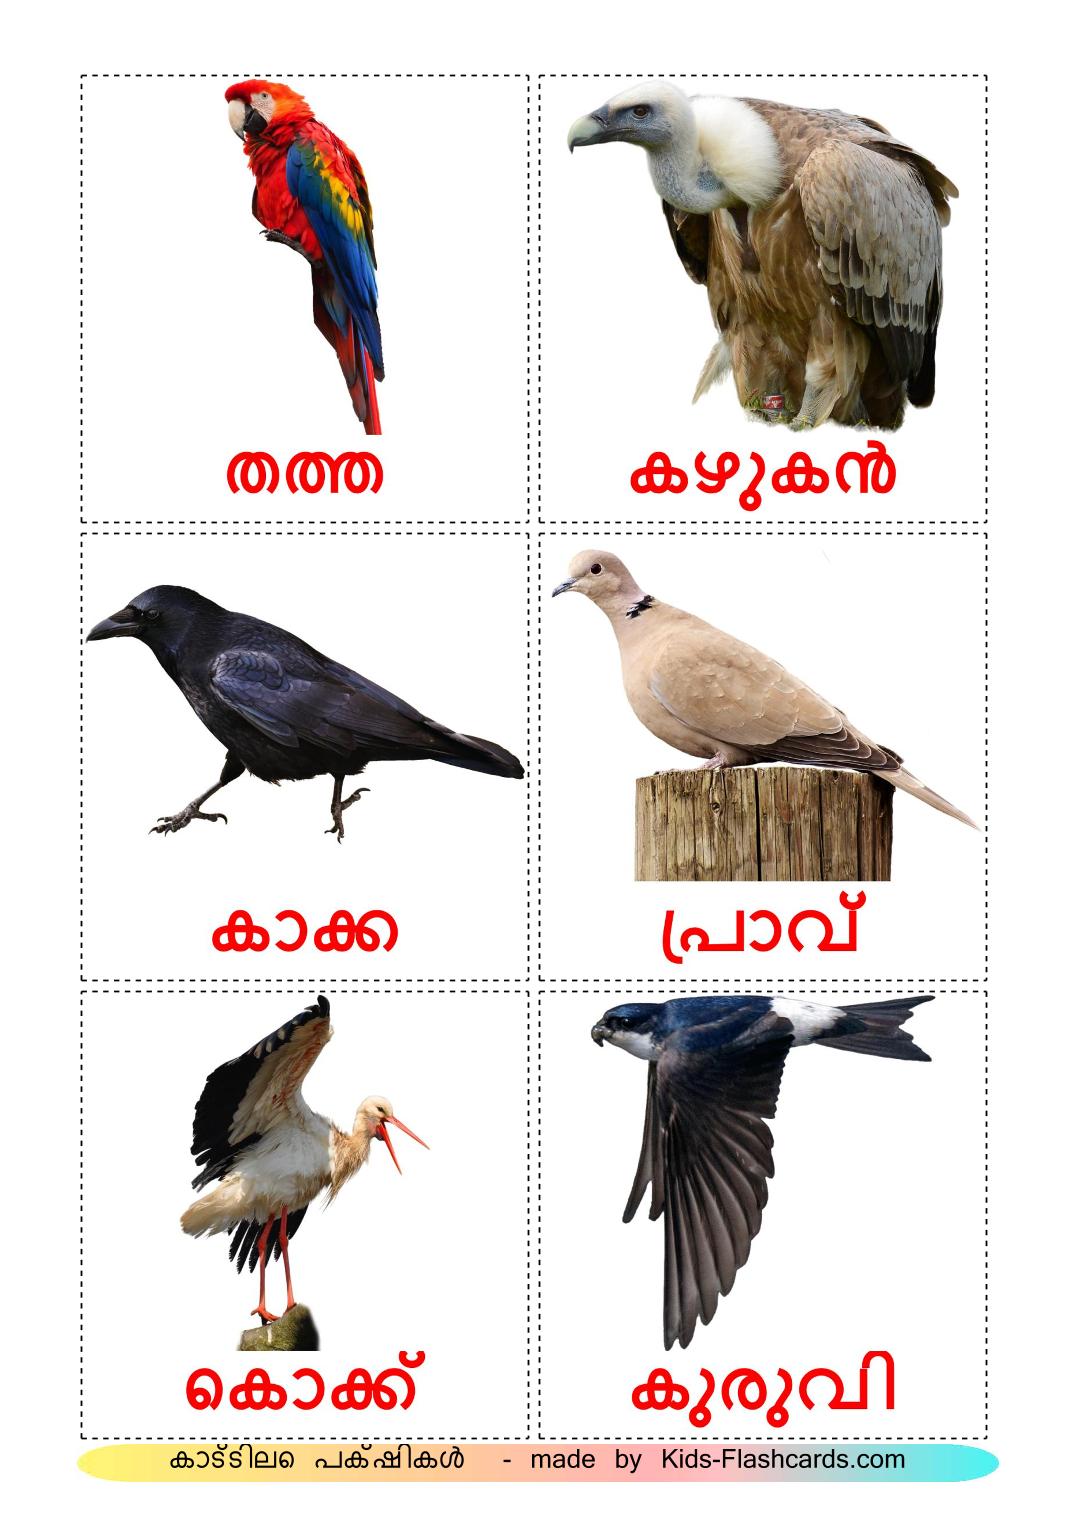 Pájaros salvajes - 18 fichas de malayalam para imprimir gratis 